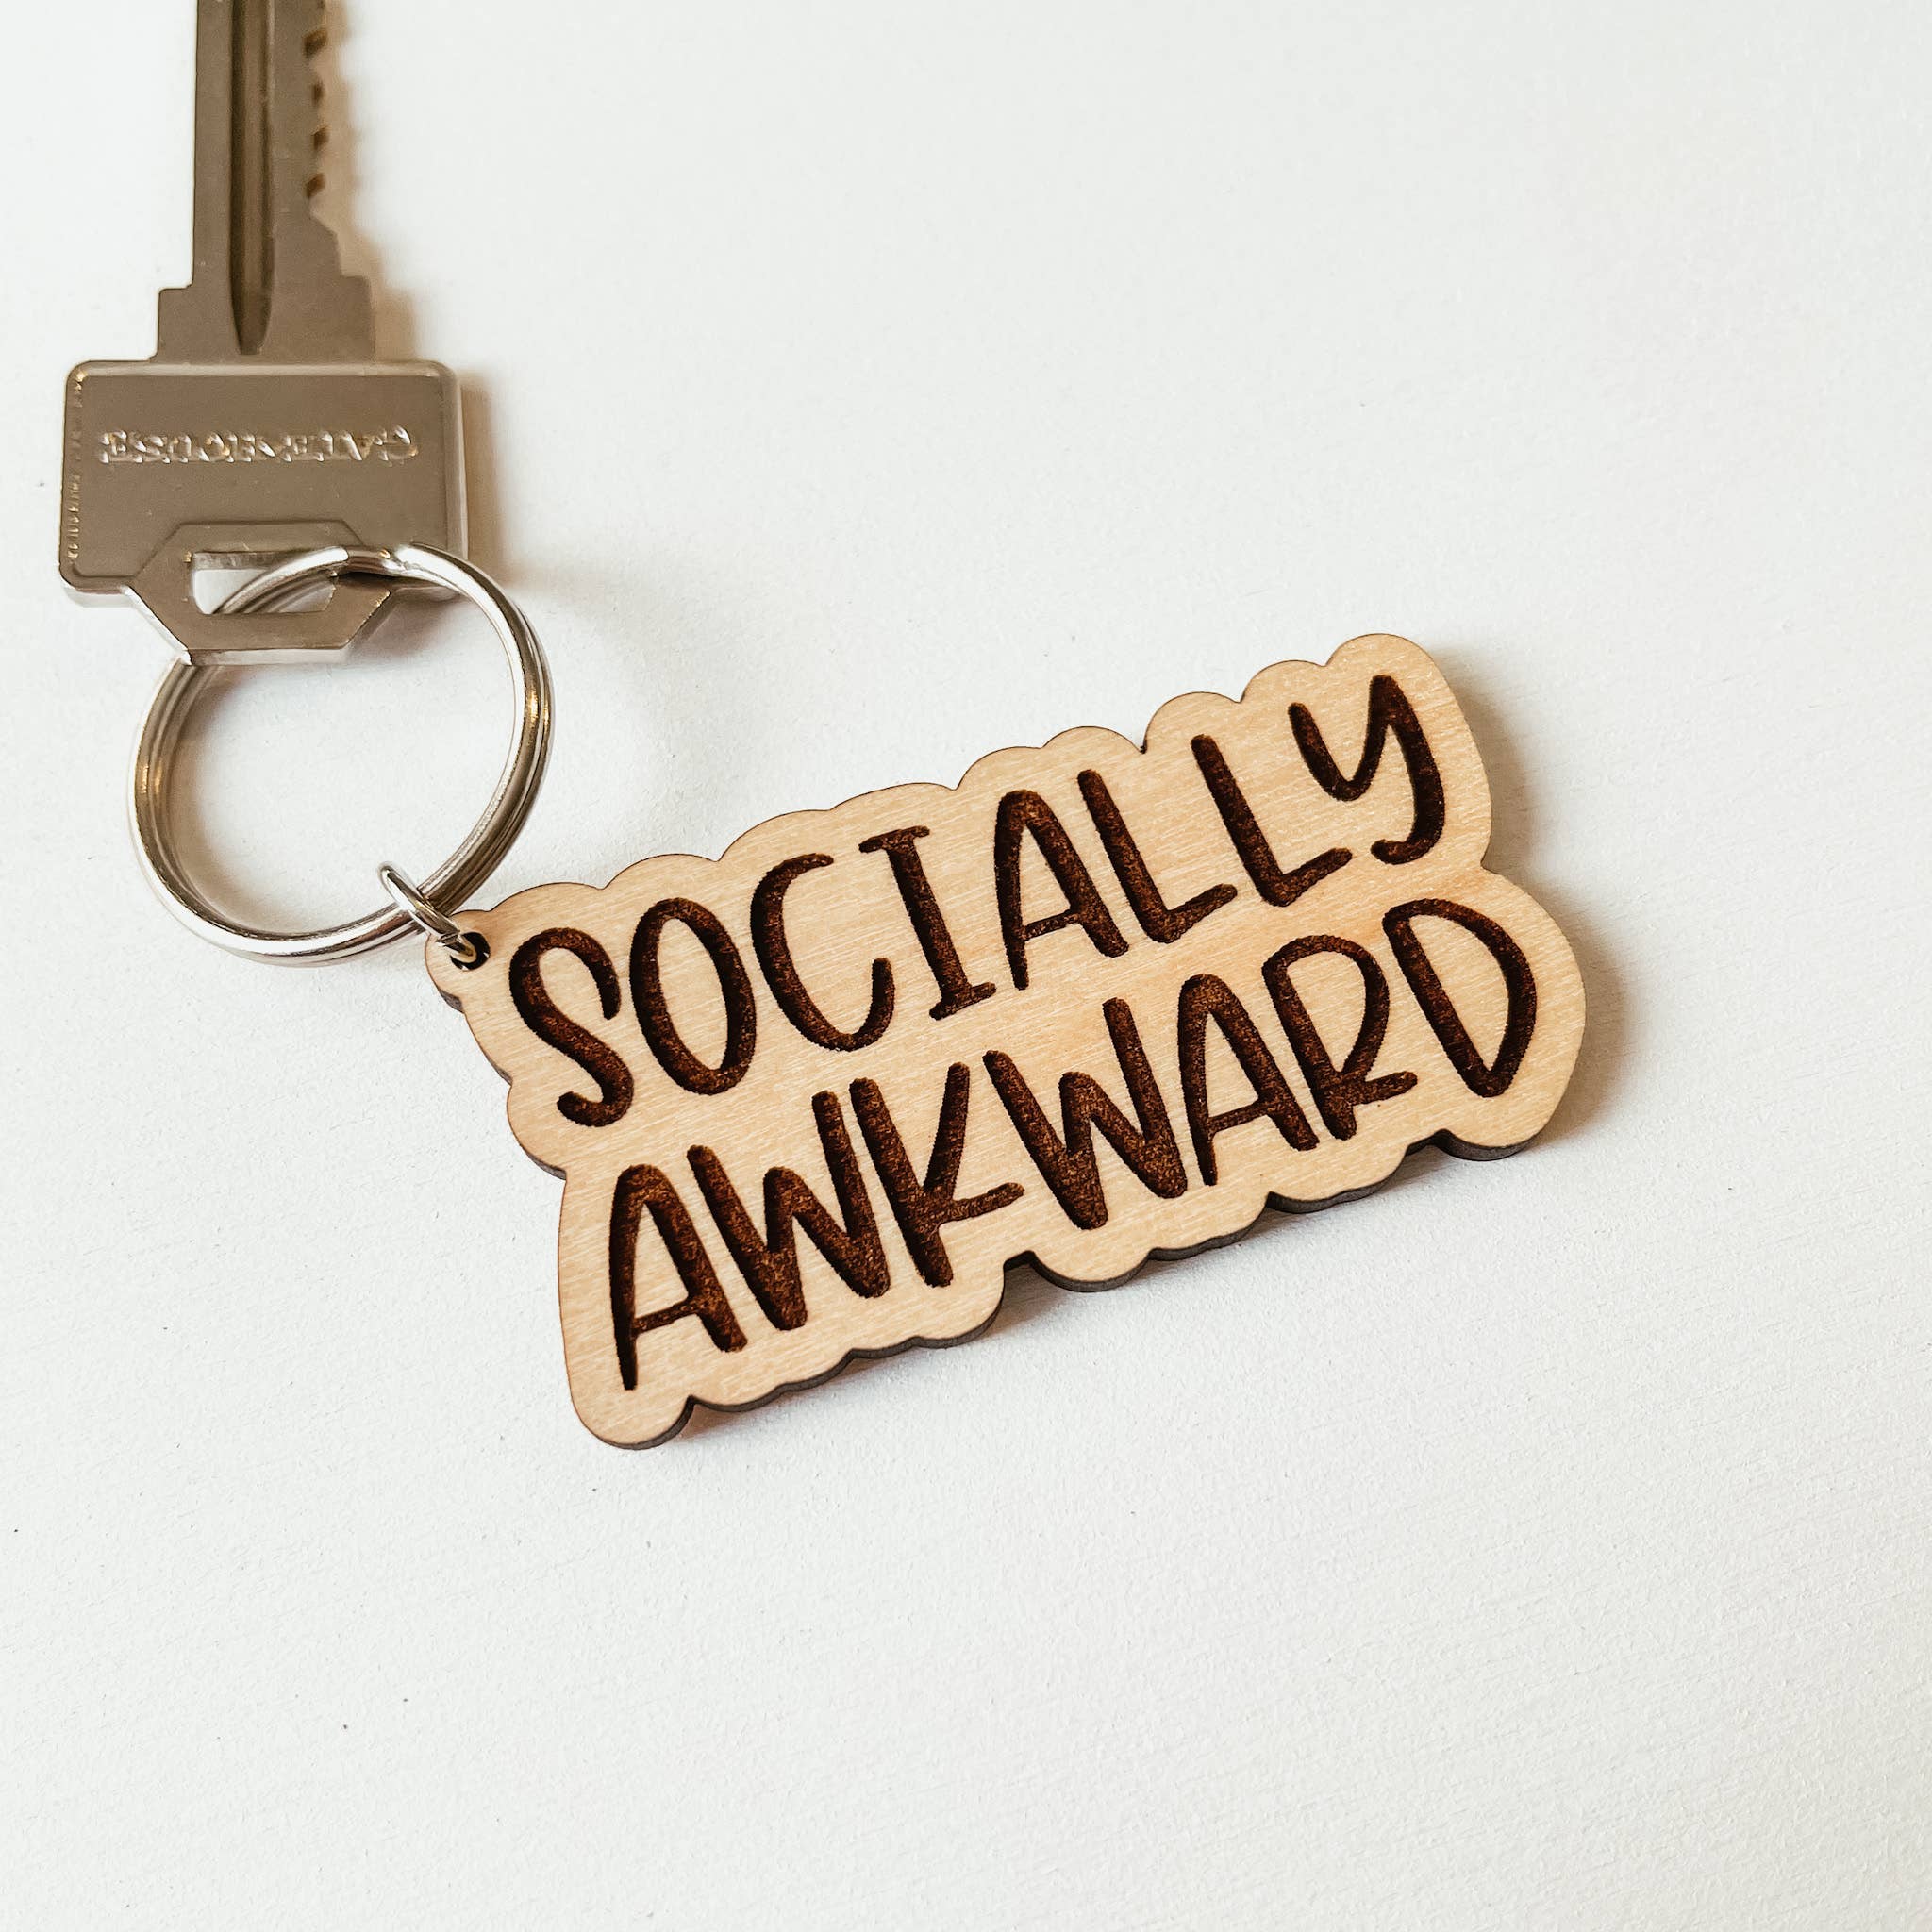 Knotty Design Co. | Socially Awkward Wooden Keychain